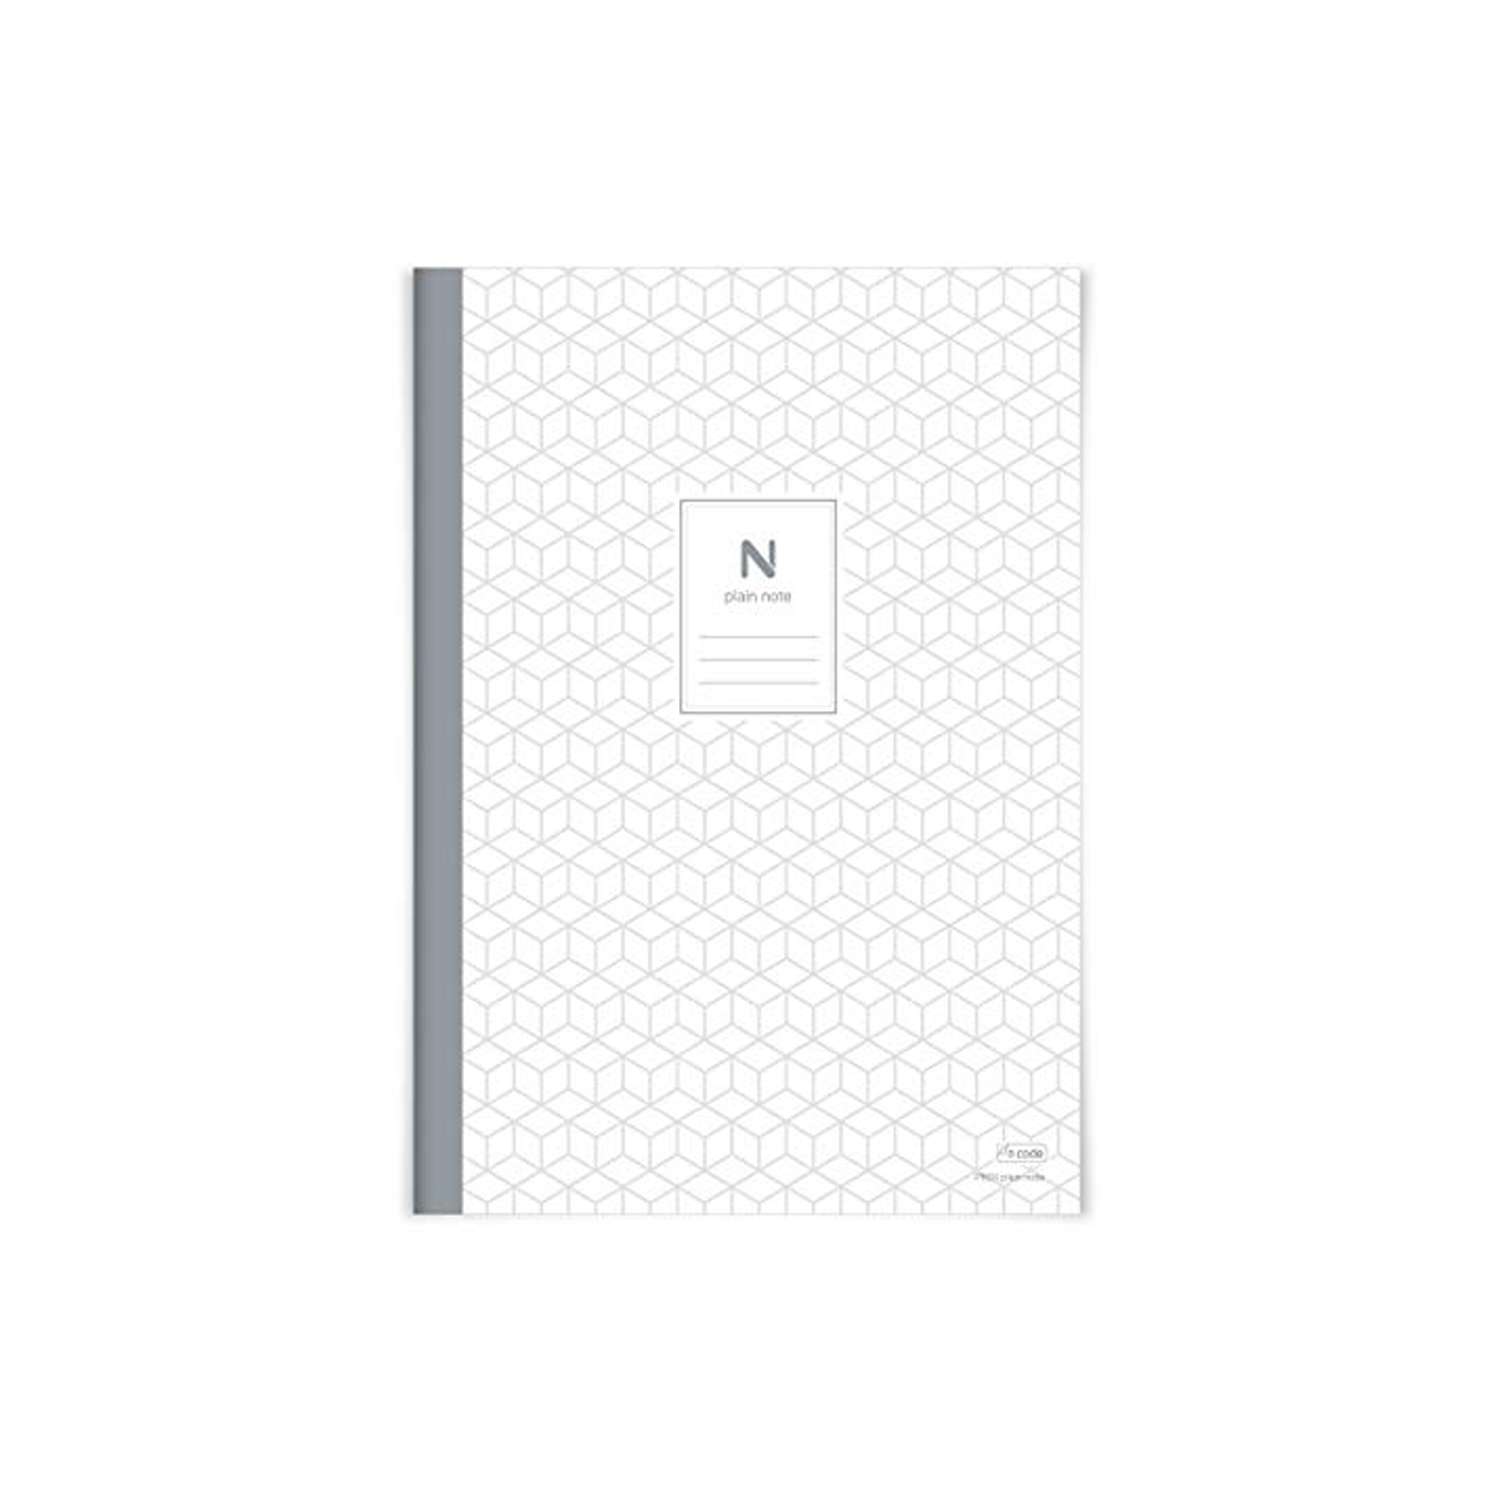 Тетрадь Neolab Neo N Plain notebook - фото 1